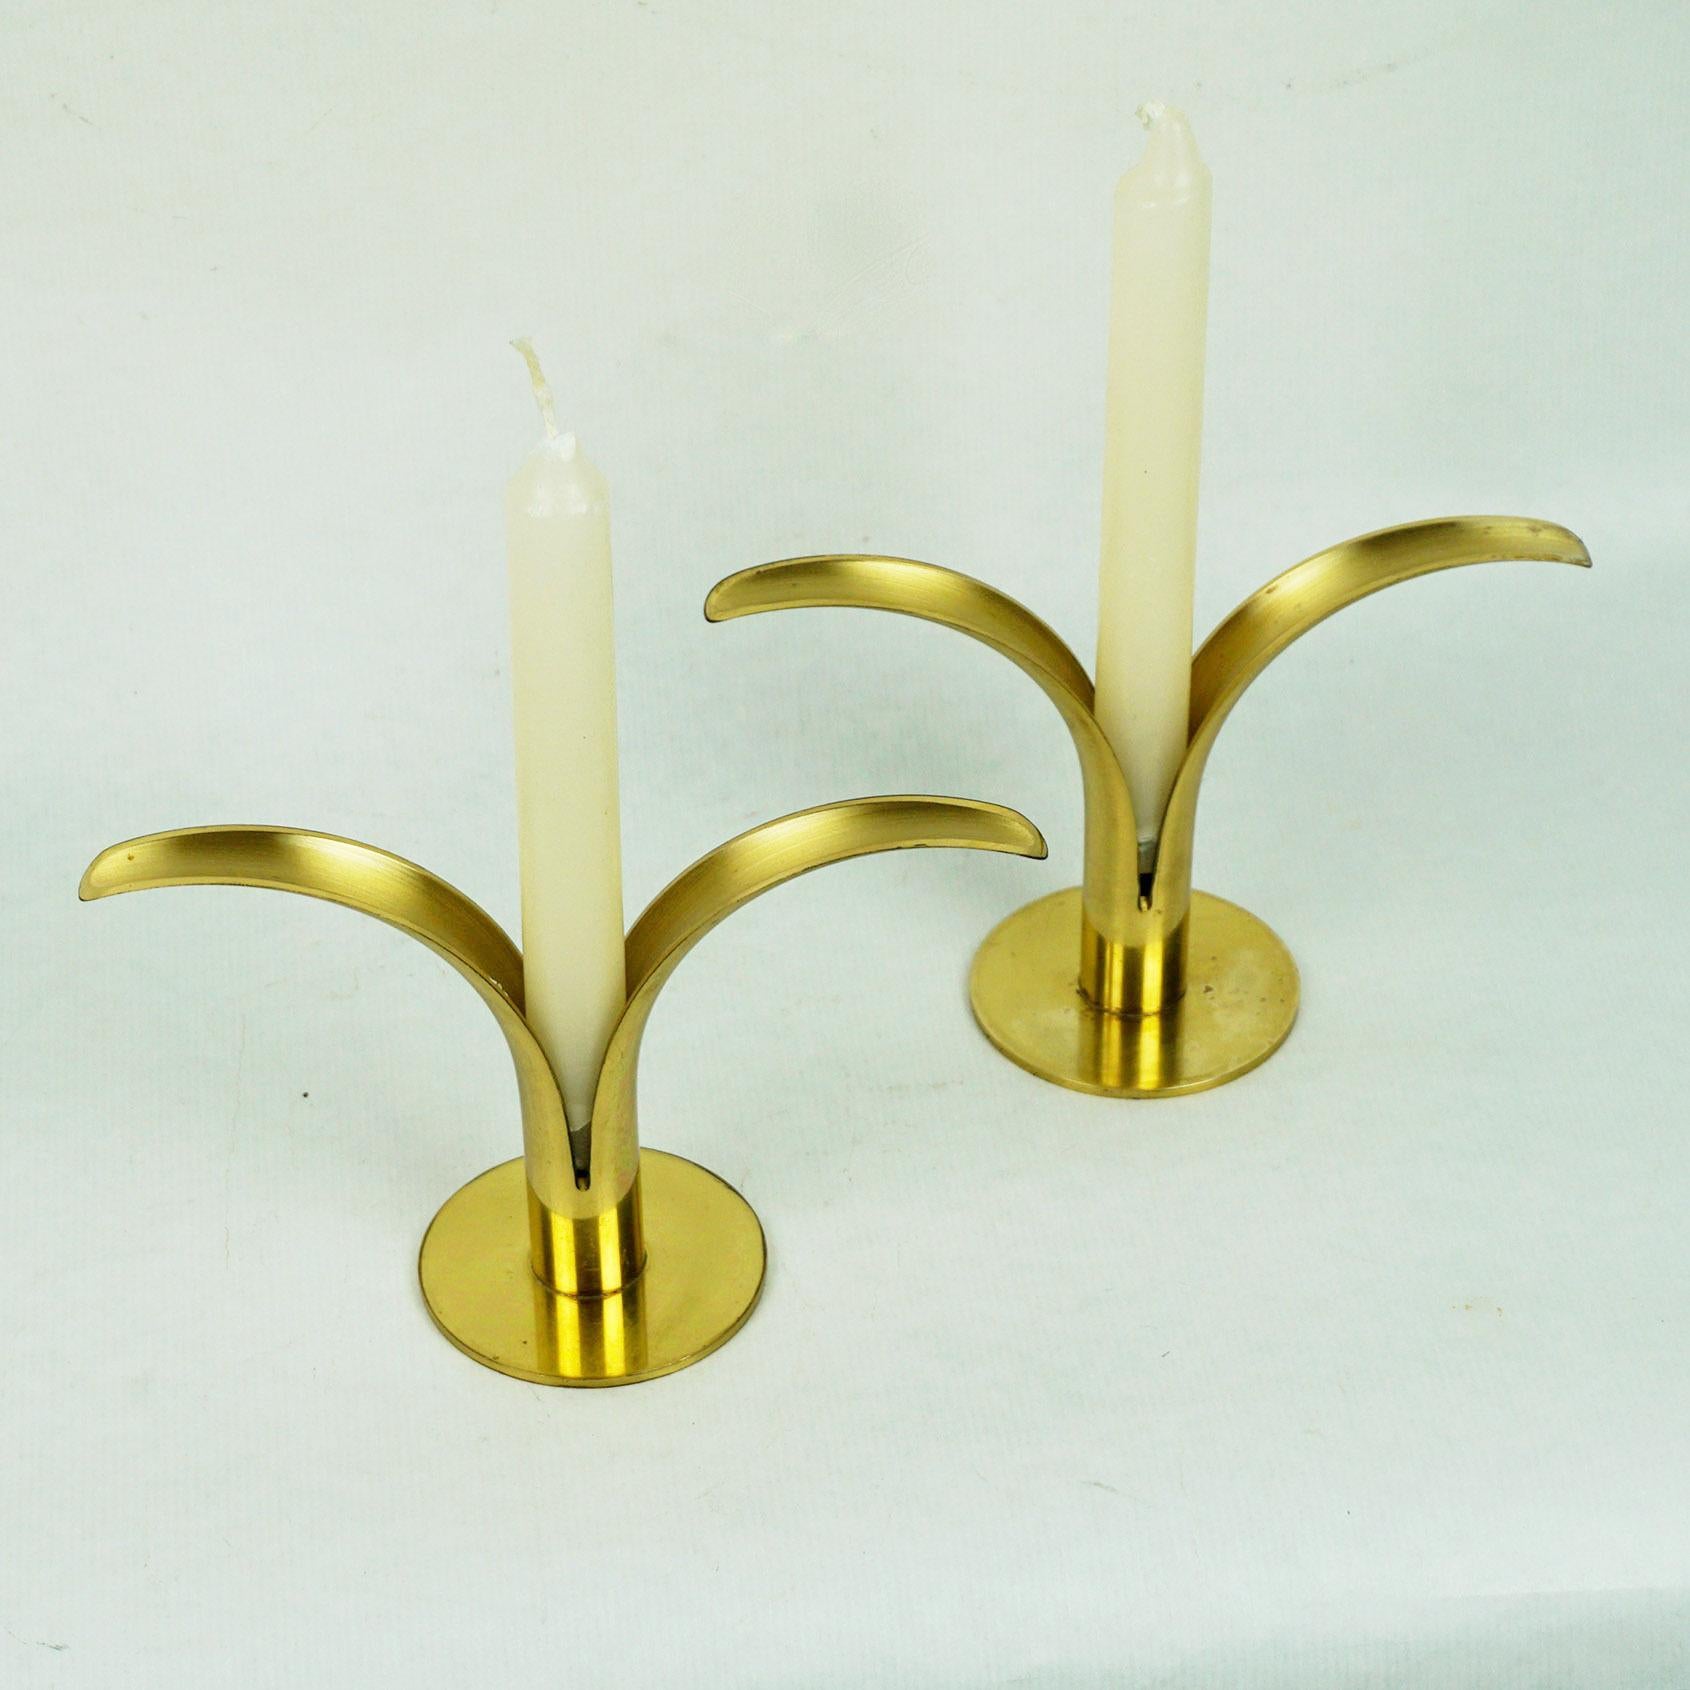 Charming pair of Liljan or Sweden Lily brass candleholders by Ivar Ålenius Björk, marked BELLI Malmö.